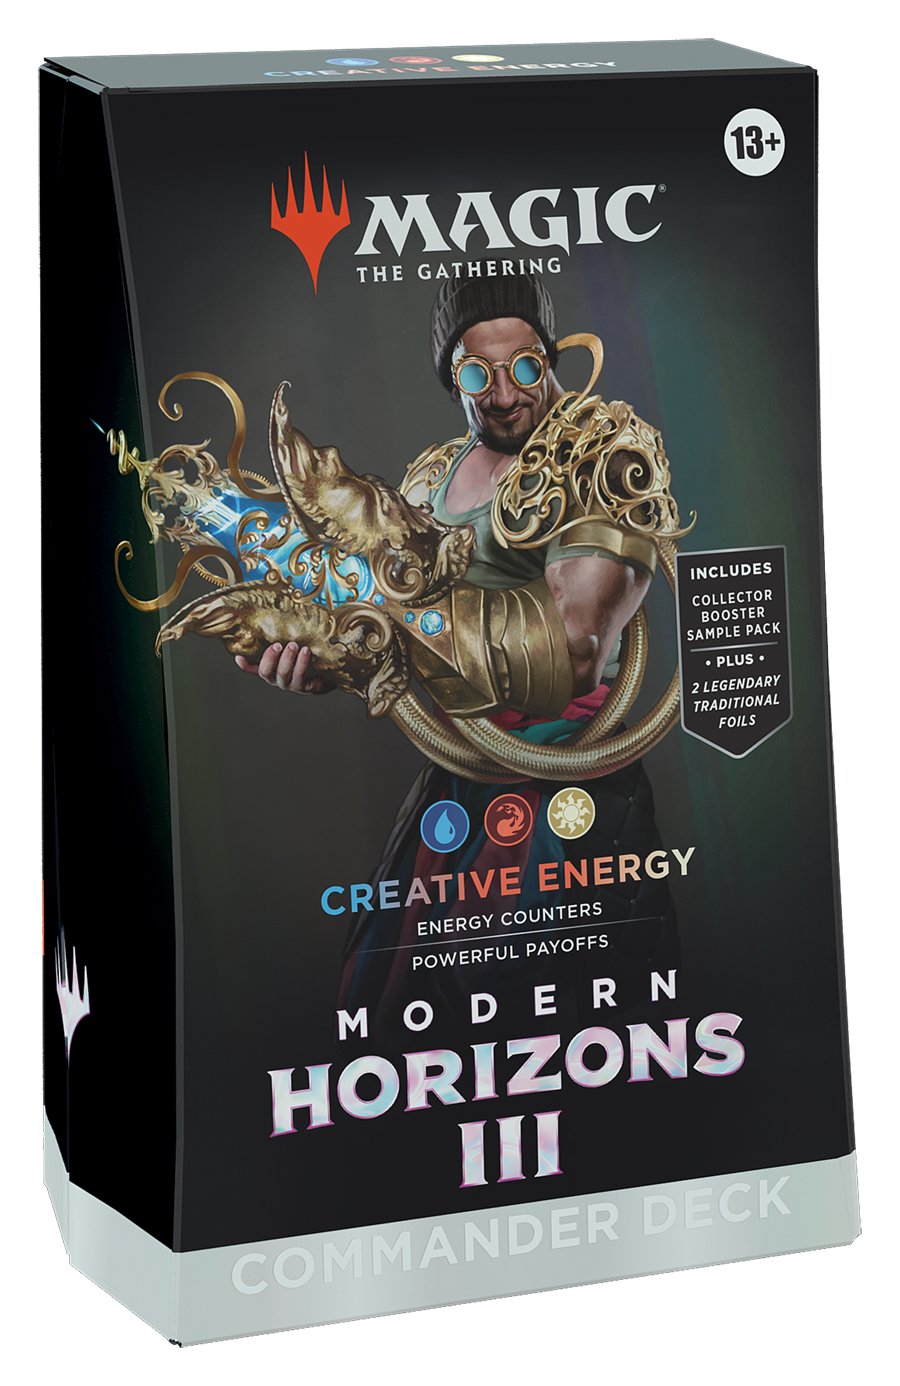 Modern Horizons 3 - Commander Deck (Creative Energy) PRE-ORDER 14 JUN